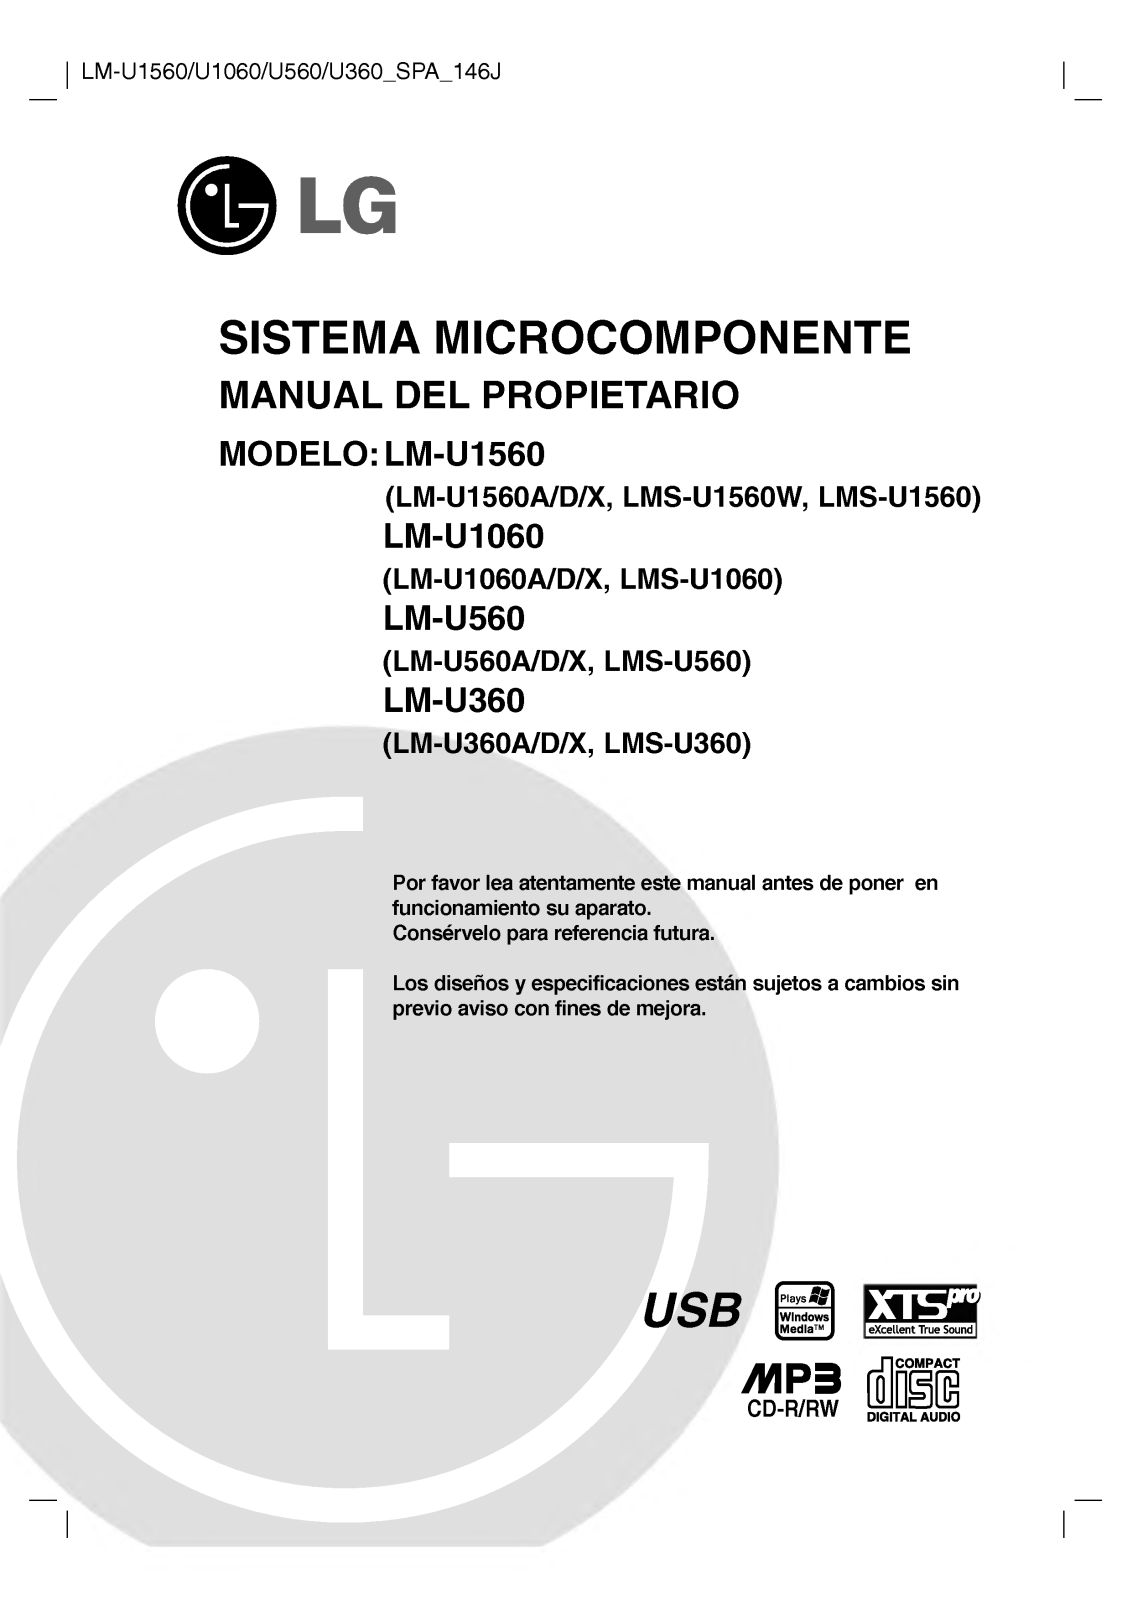 Lg LM-U1060, LM-U360, LM-U560, LM-U1560 user Manual